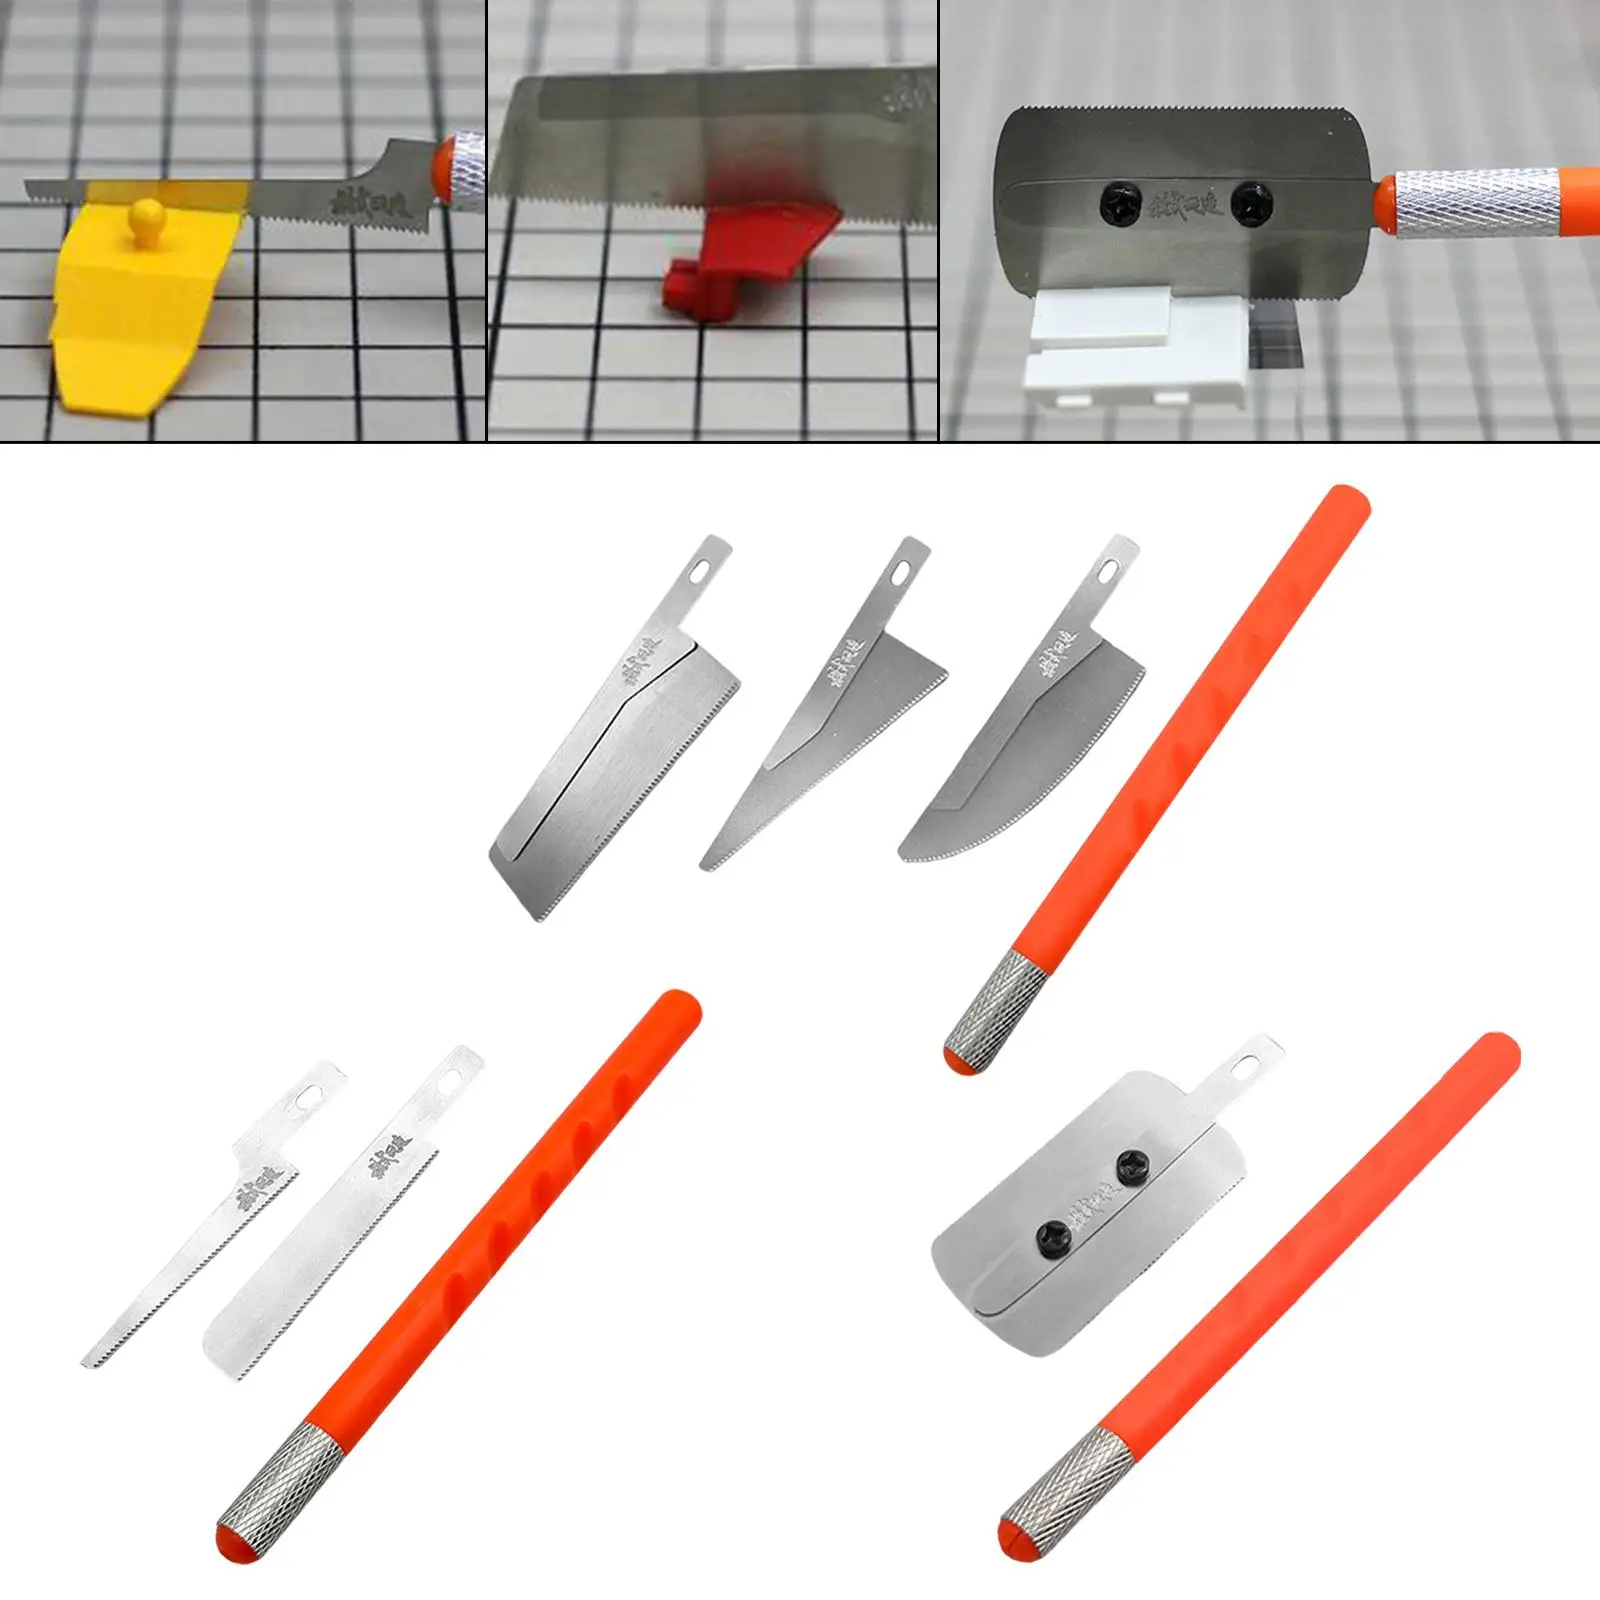 Model Making Tool Multipurpose DIY Accessory Metal for Models Architectural